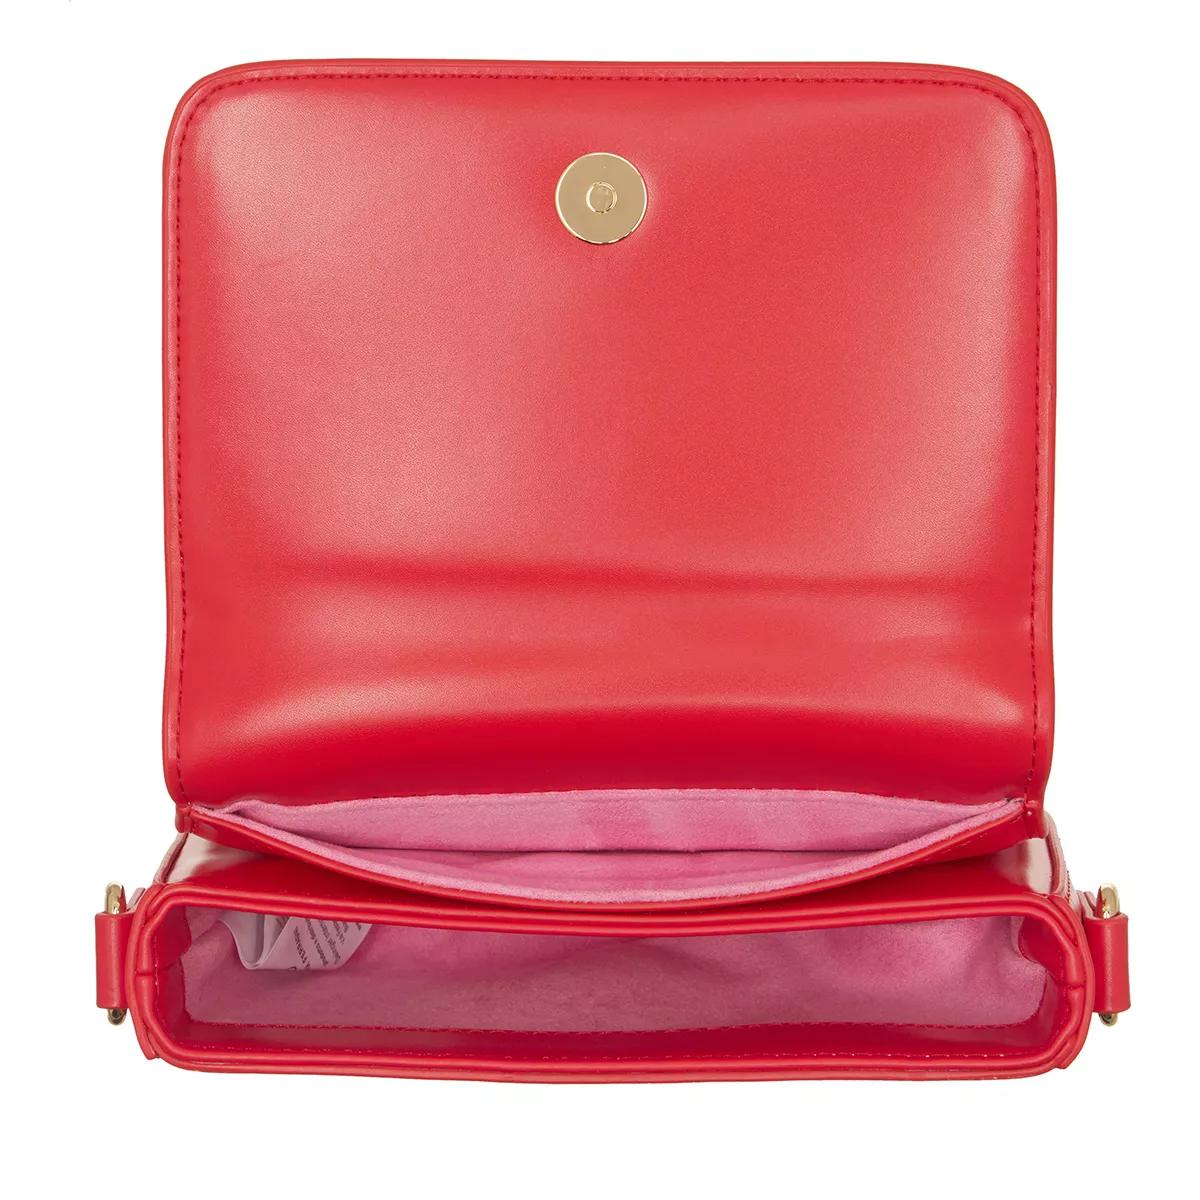 Chiara Ferragni Crossbody bags Range K Cf Simple Sketch 02 Bags in rood